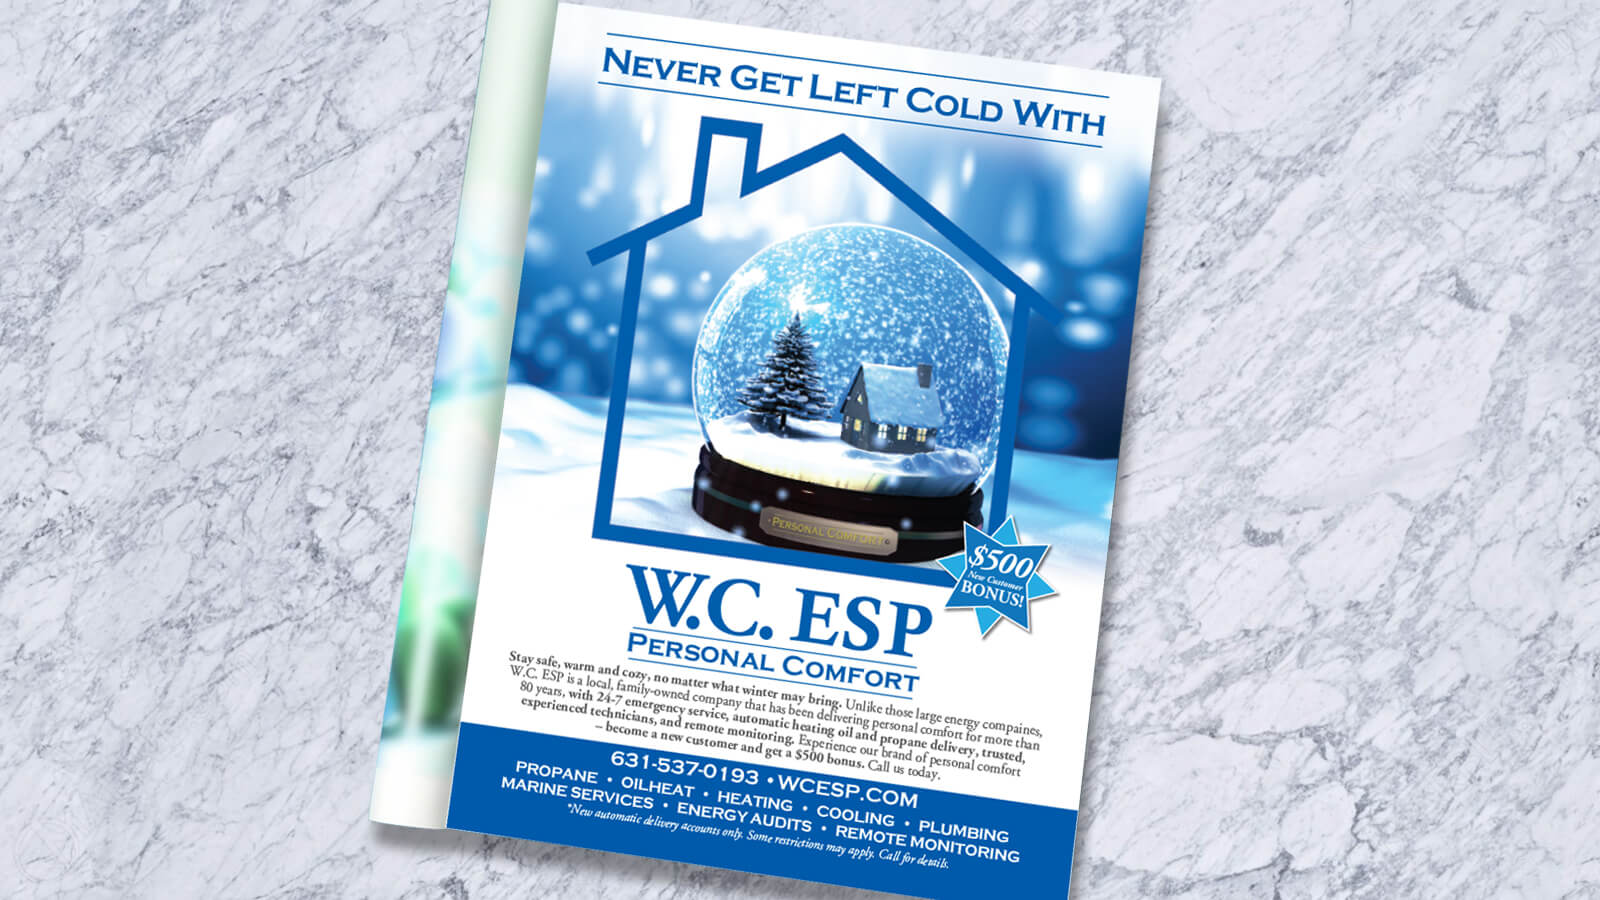 W.C. Esp Ad Snow Globe